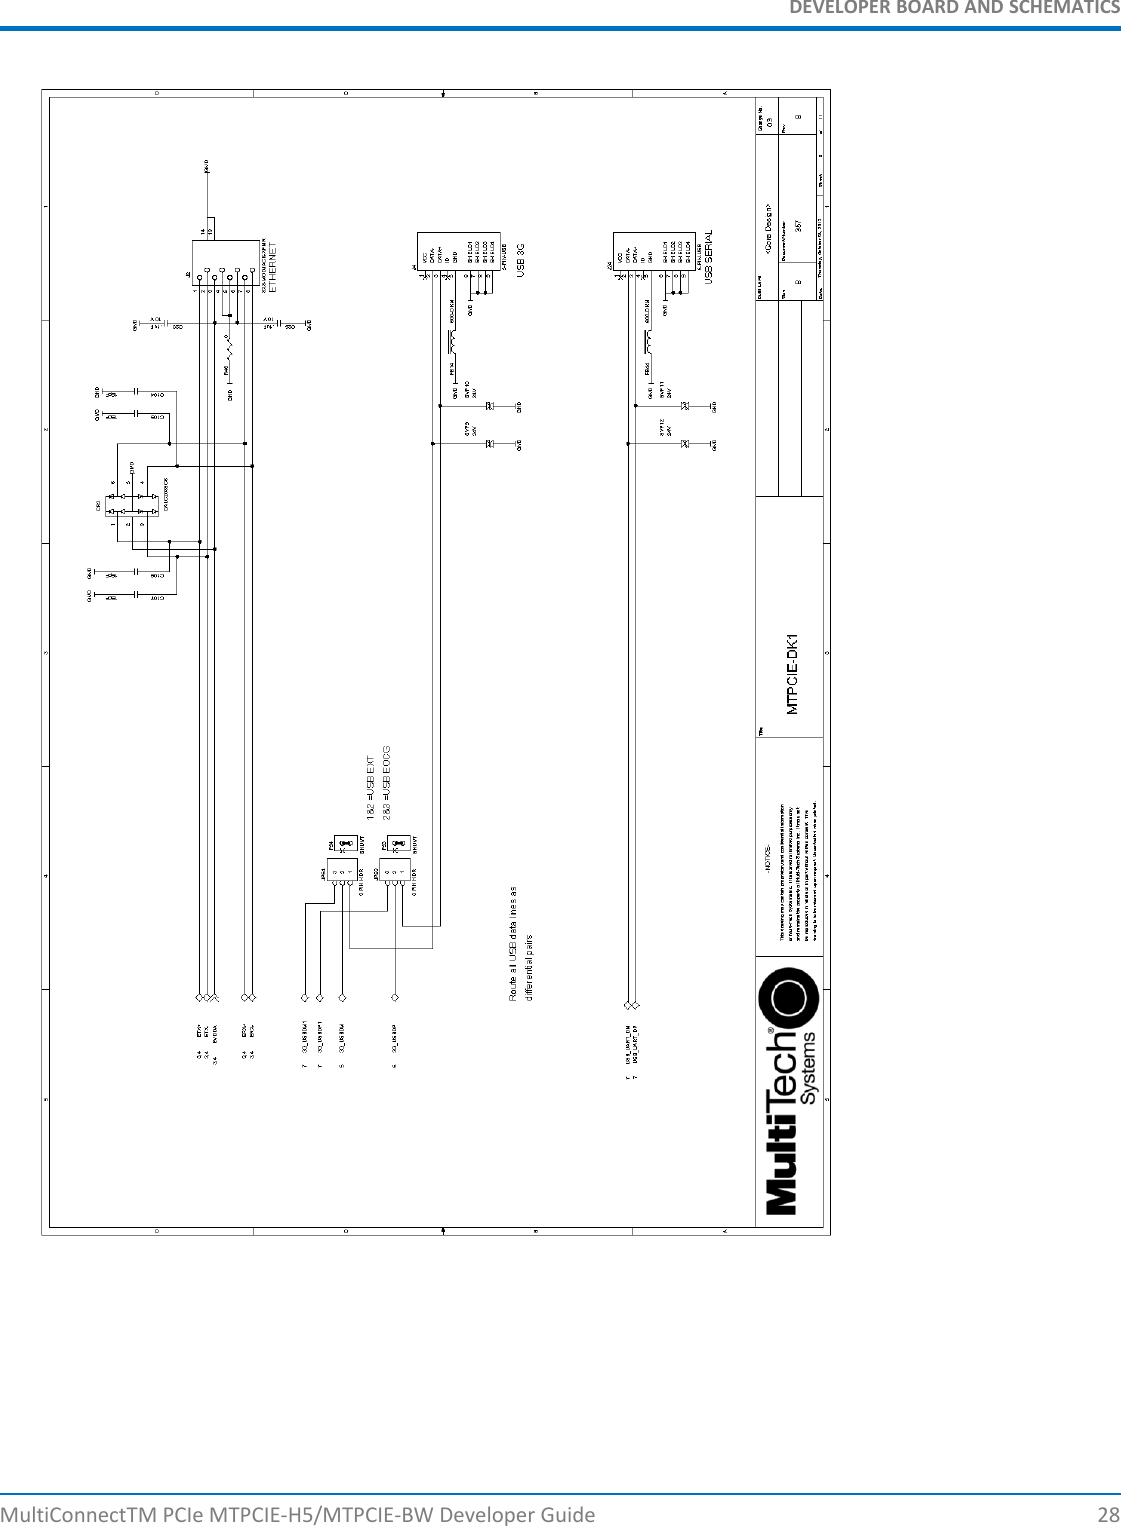 DEVELOPER BOARD AND SCHEMATICSMultiConnectTM PCIe MTPCIE-H5/MTPCIE-BW Developer Guide 28